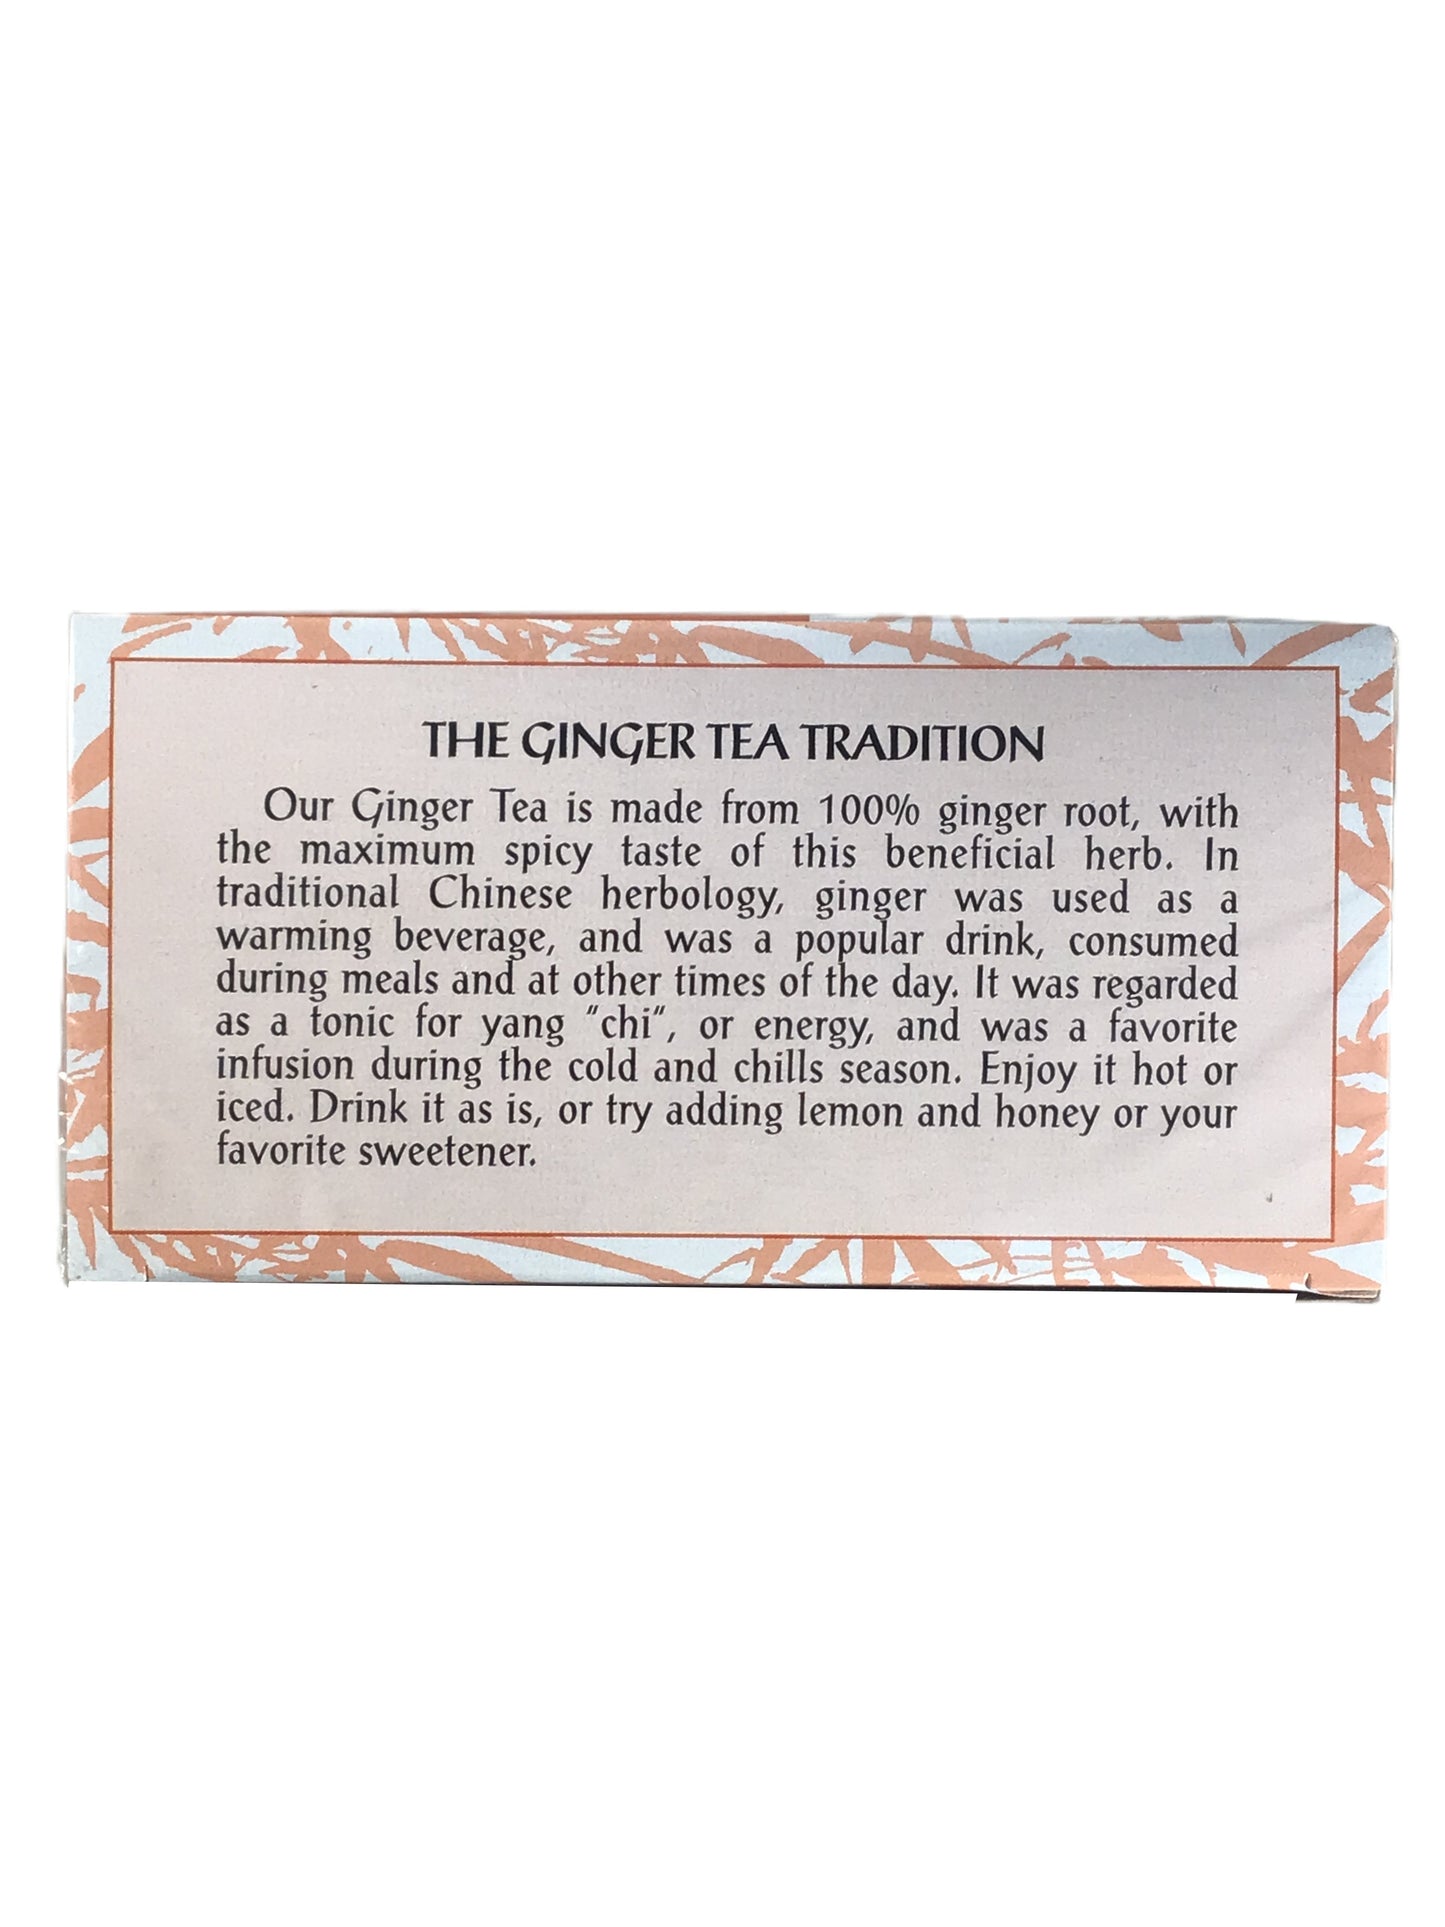 Triple Leaf Brand Ginger Tea 姜茶